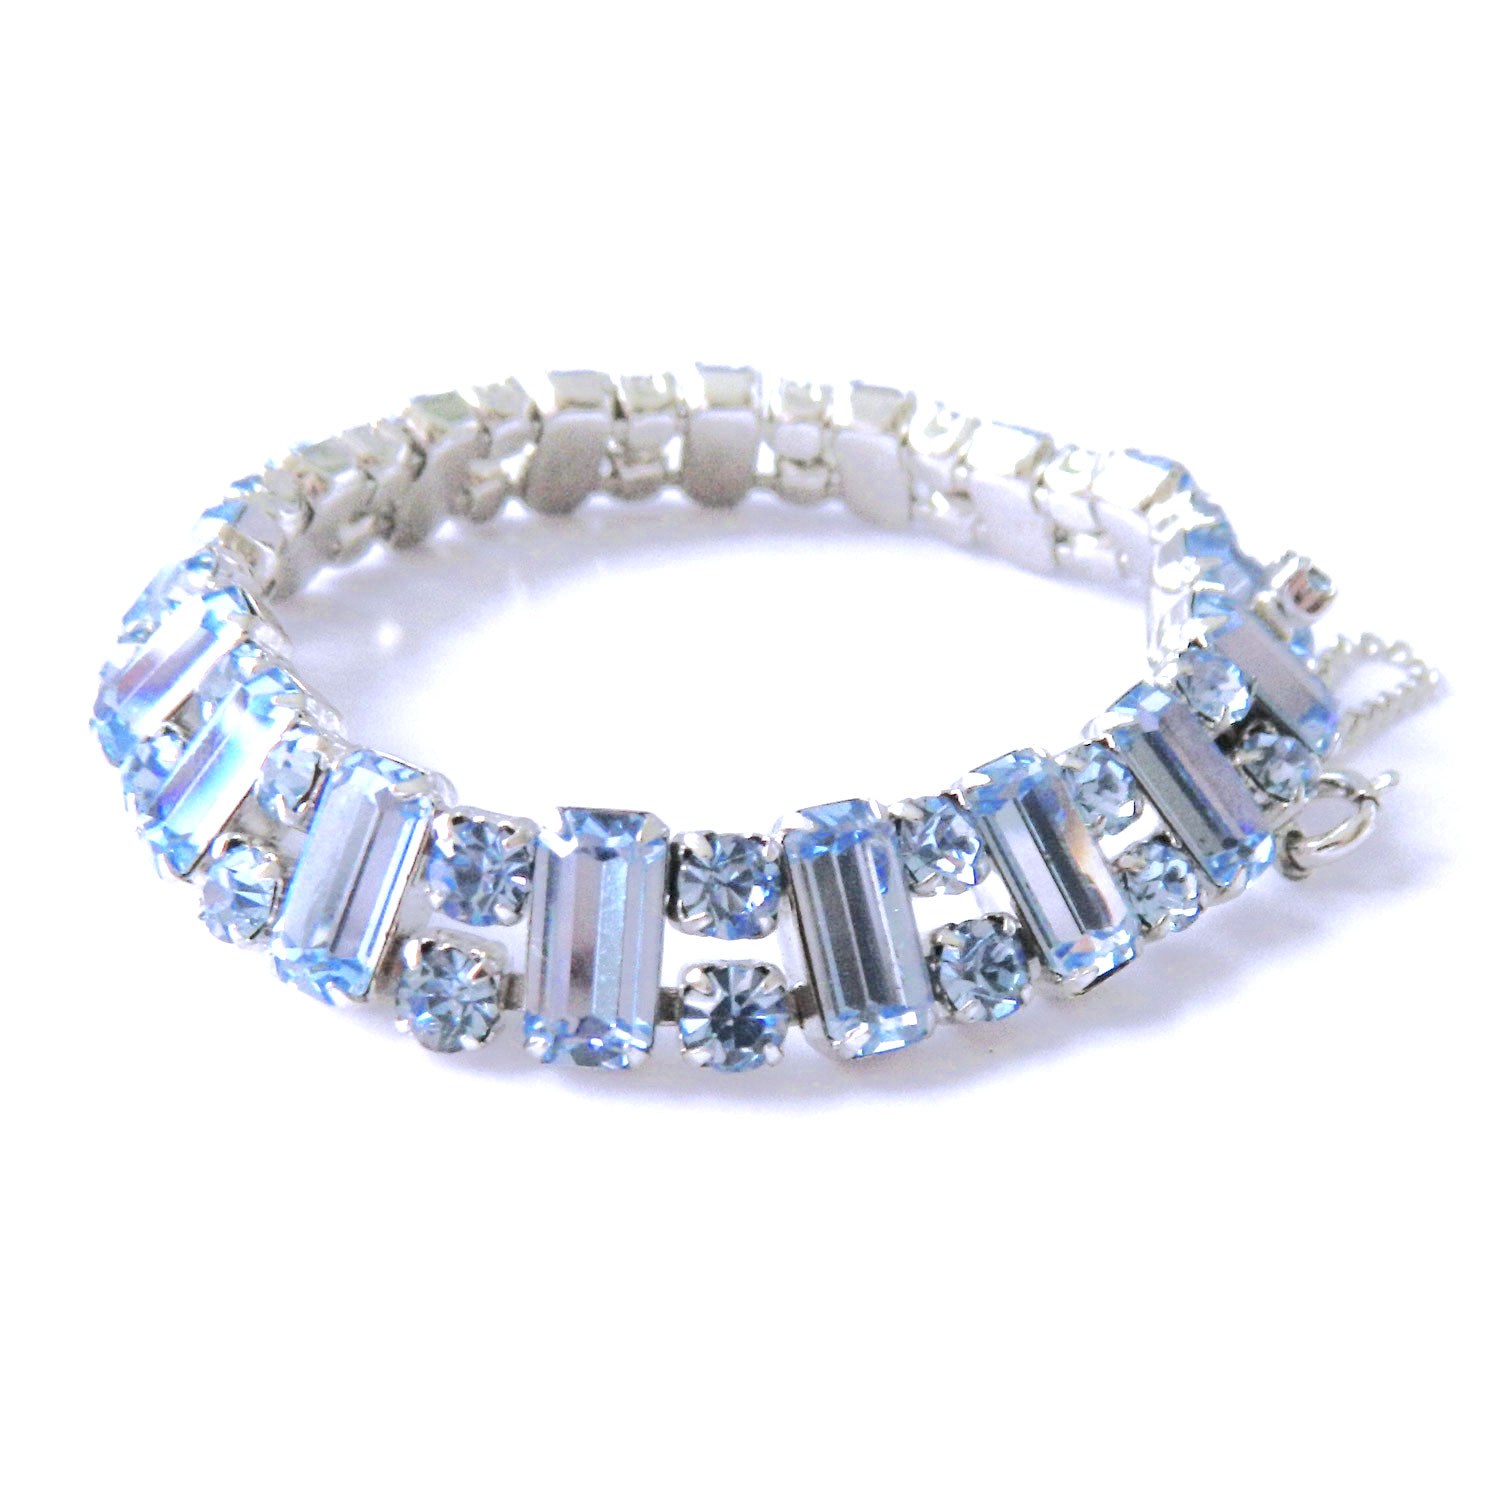 Weiss Art Deco rhinestone bracelet